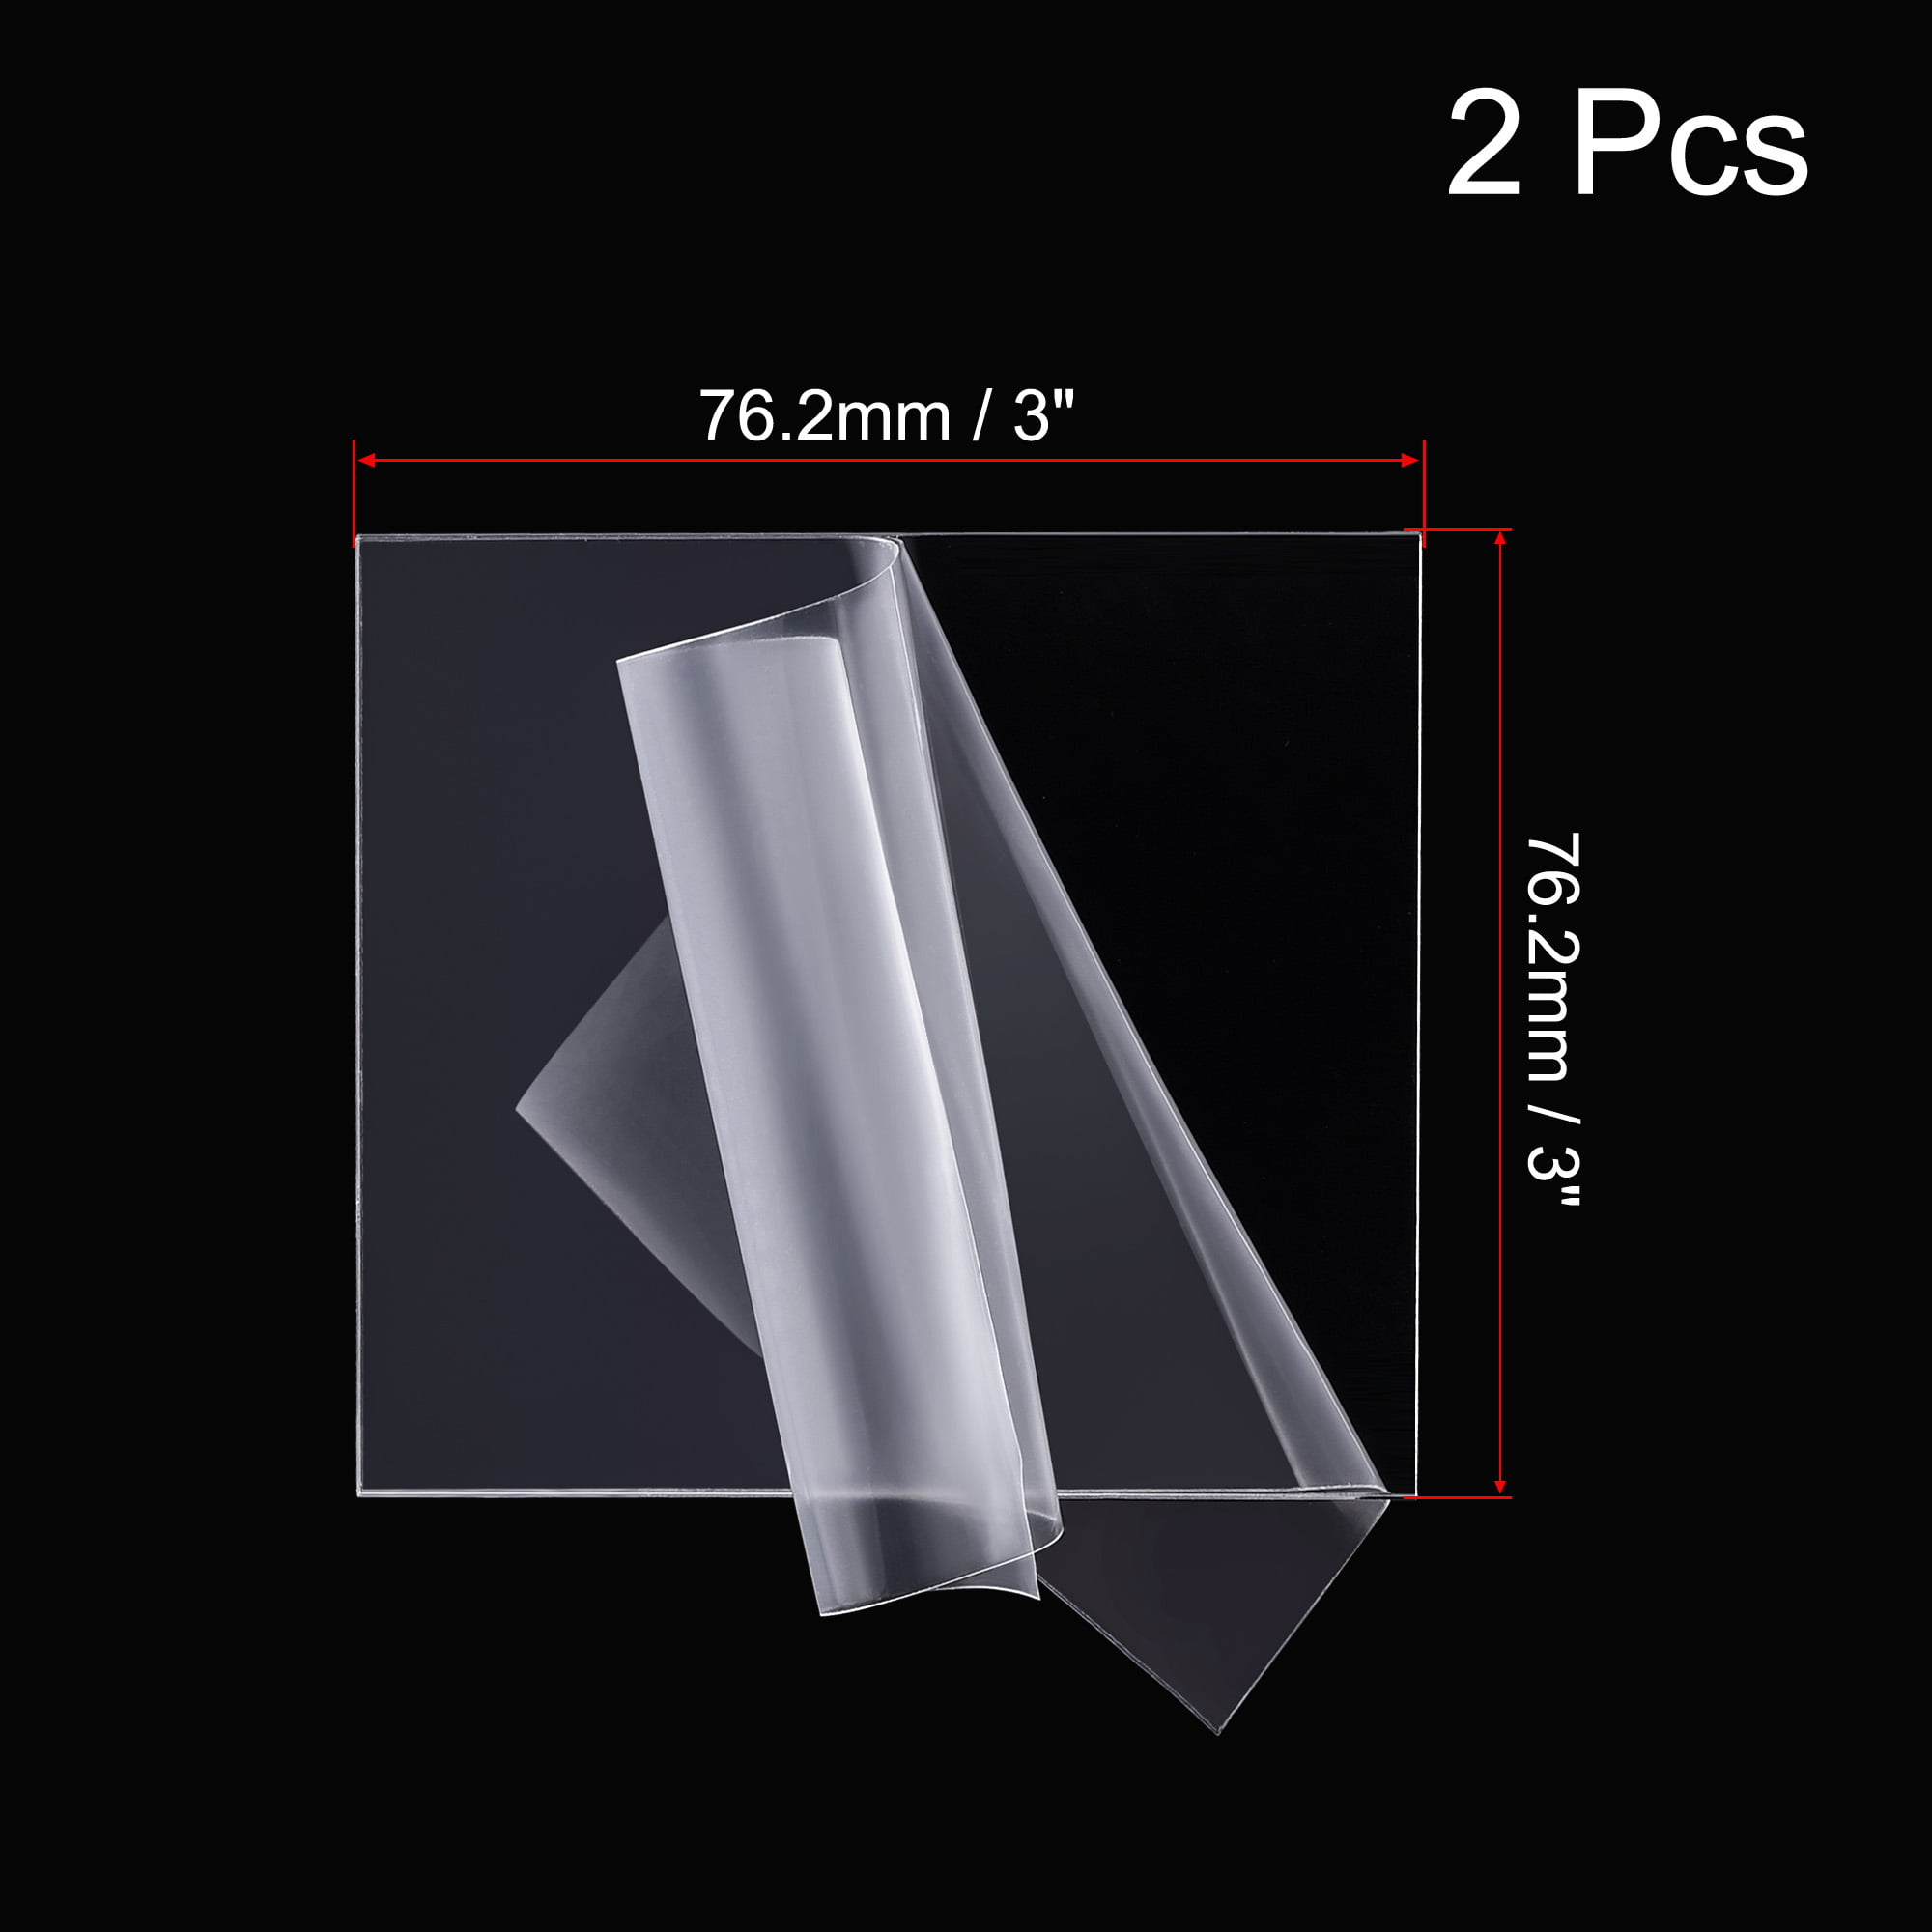 2pcs Acrylic Sheet,Clear,2.5mm Thick,76.2 x 76.2mm,Plastic Board 